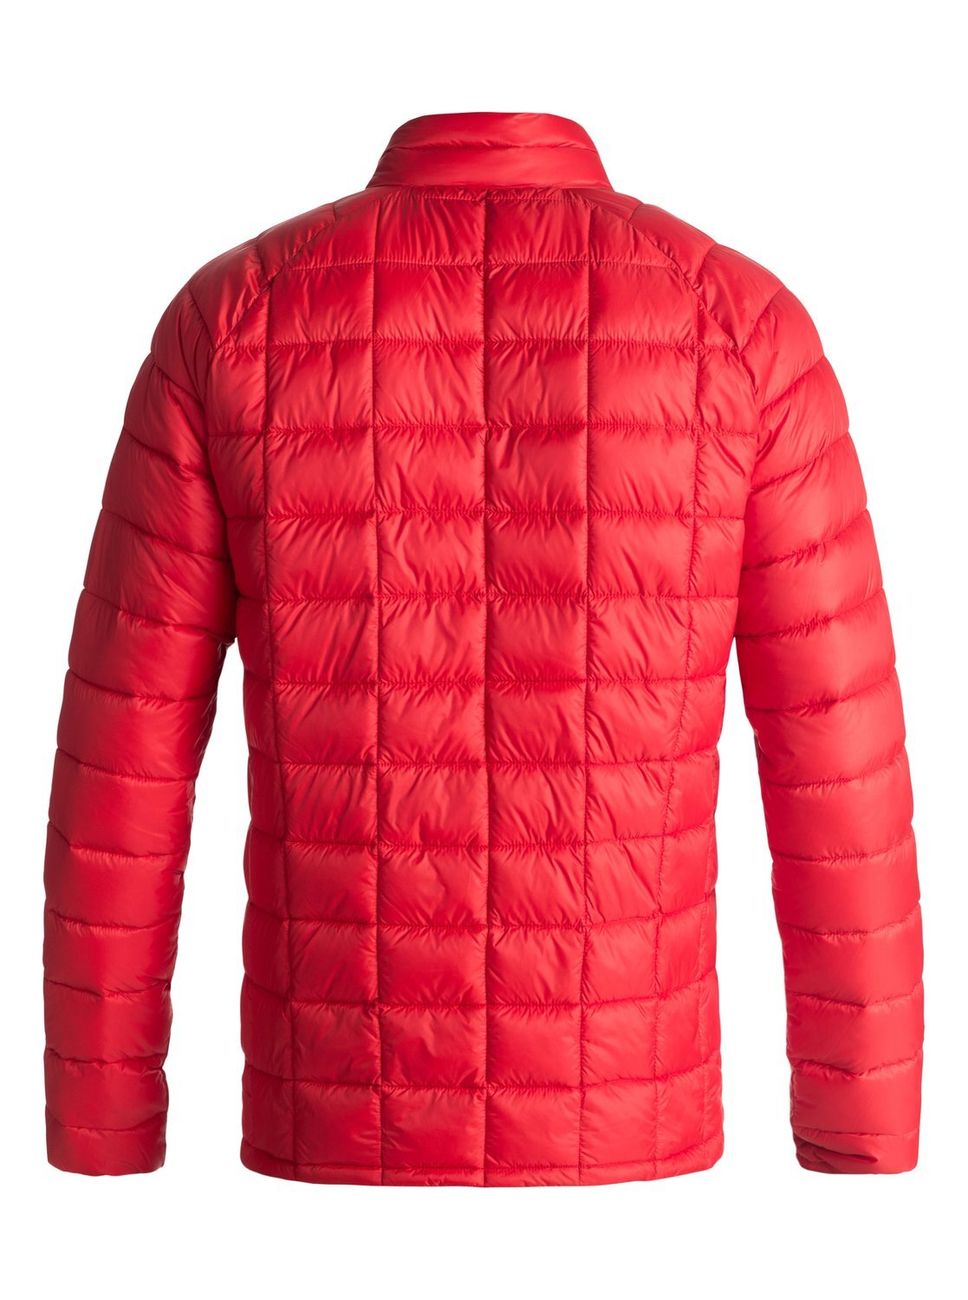 Сноубордическая куртка Quiksilver ( EQYJK03400 ) RELEASE JK M JCKT 2019 2